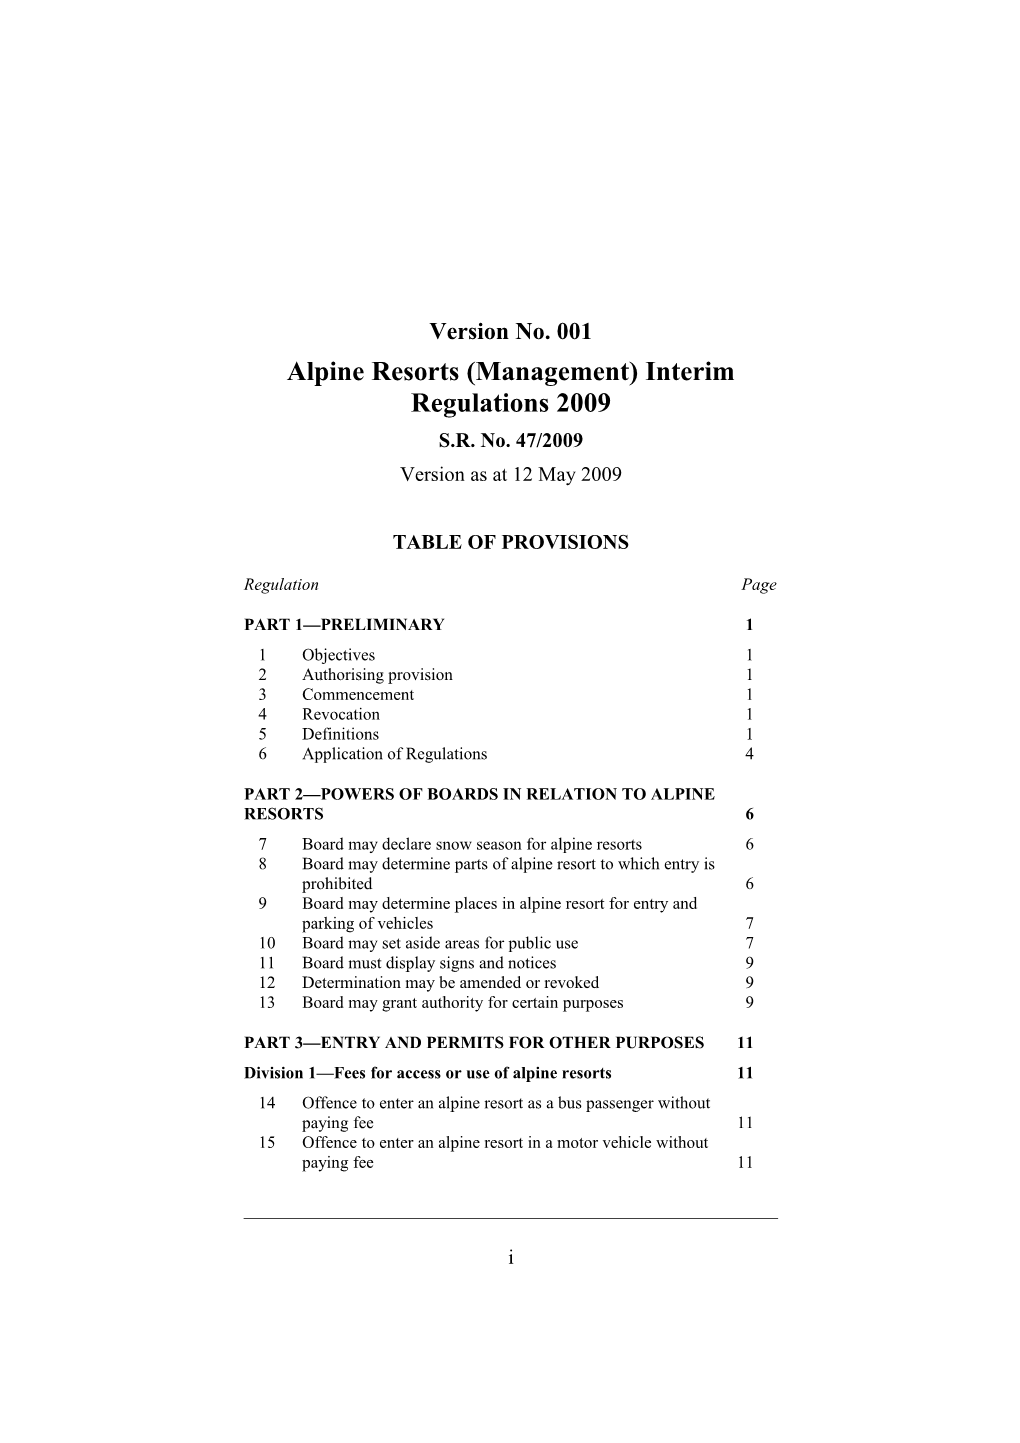 Alpine Resorts (Management) Interim Regulations 2009